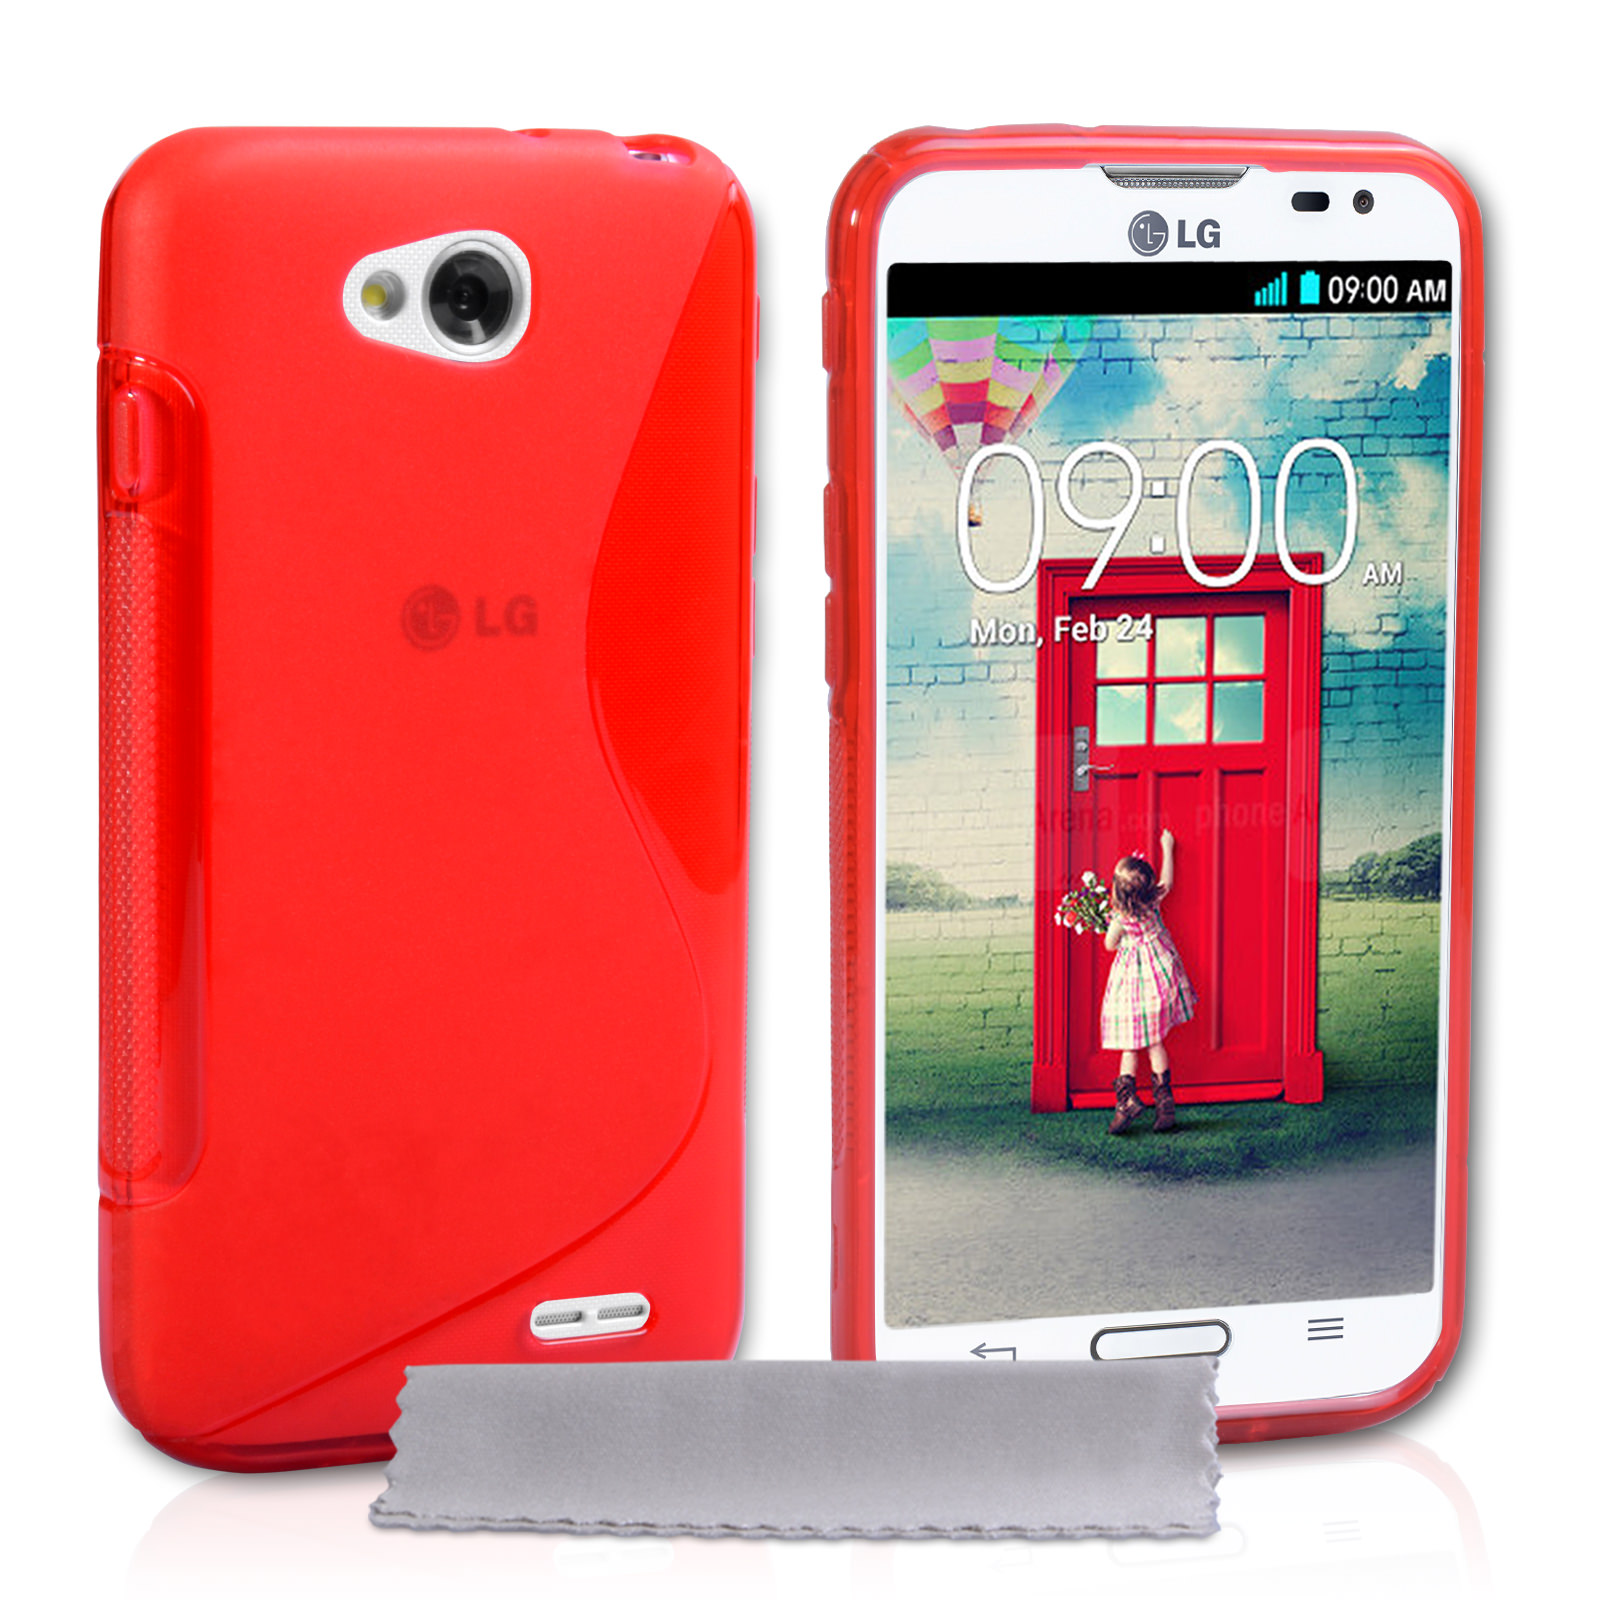 Caseflex LG L90 Silicone Gel S-Line Case - Red